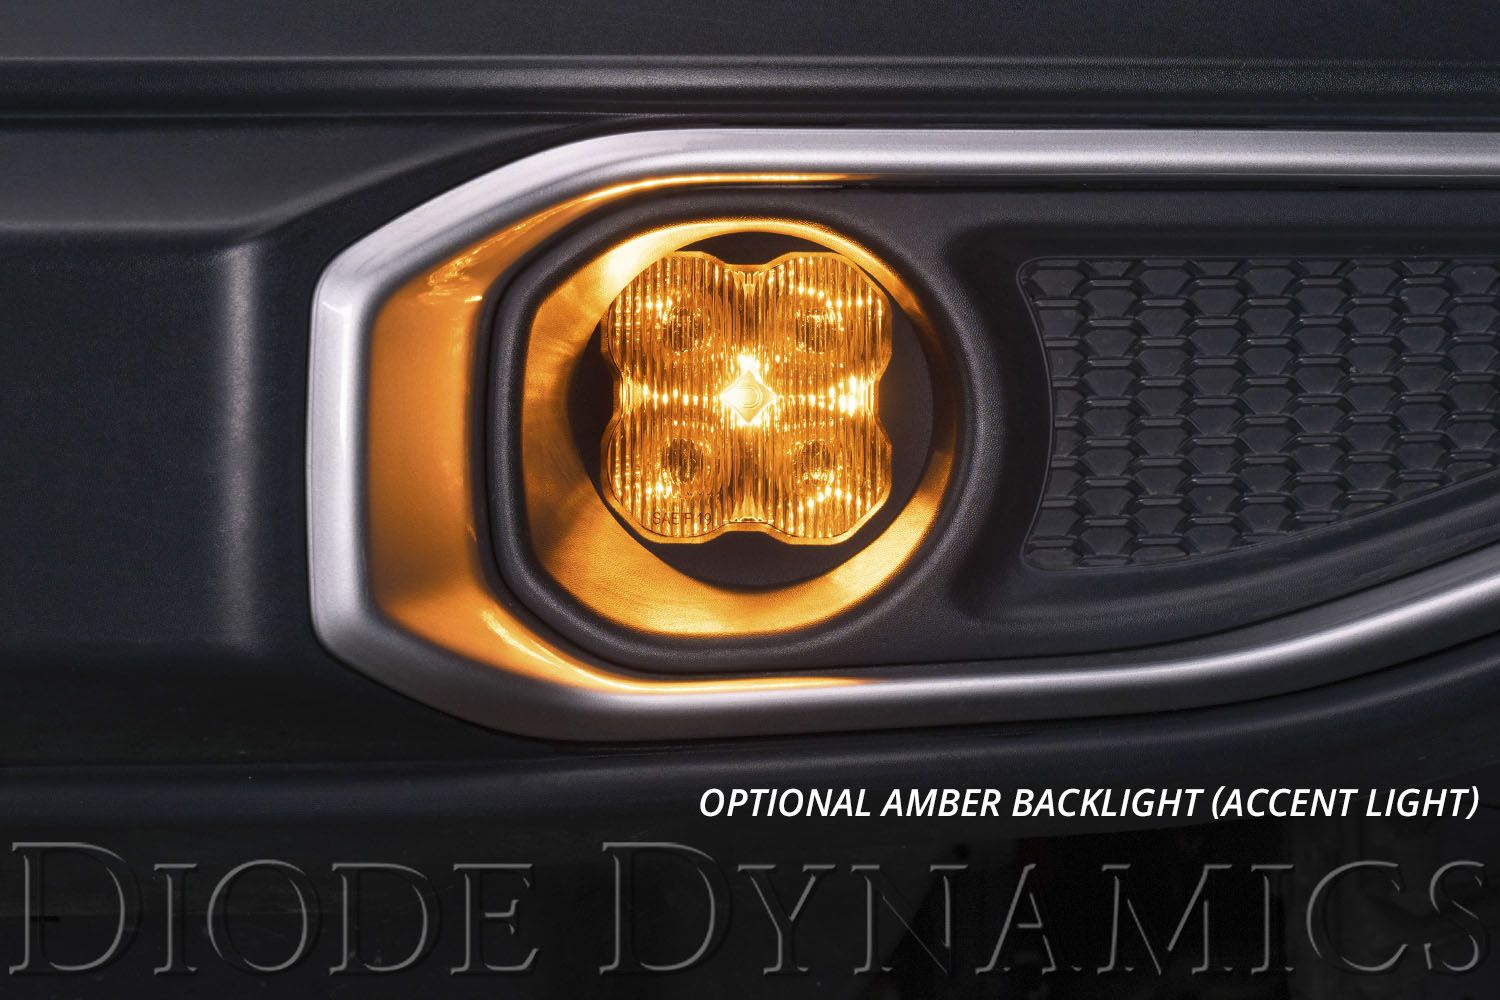 SS3 LED Fog Light Kit for 11-14 Subaru WRX Diode Dynamics-